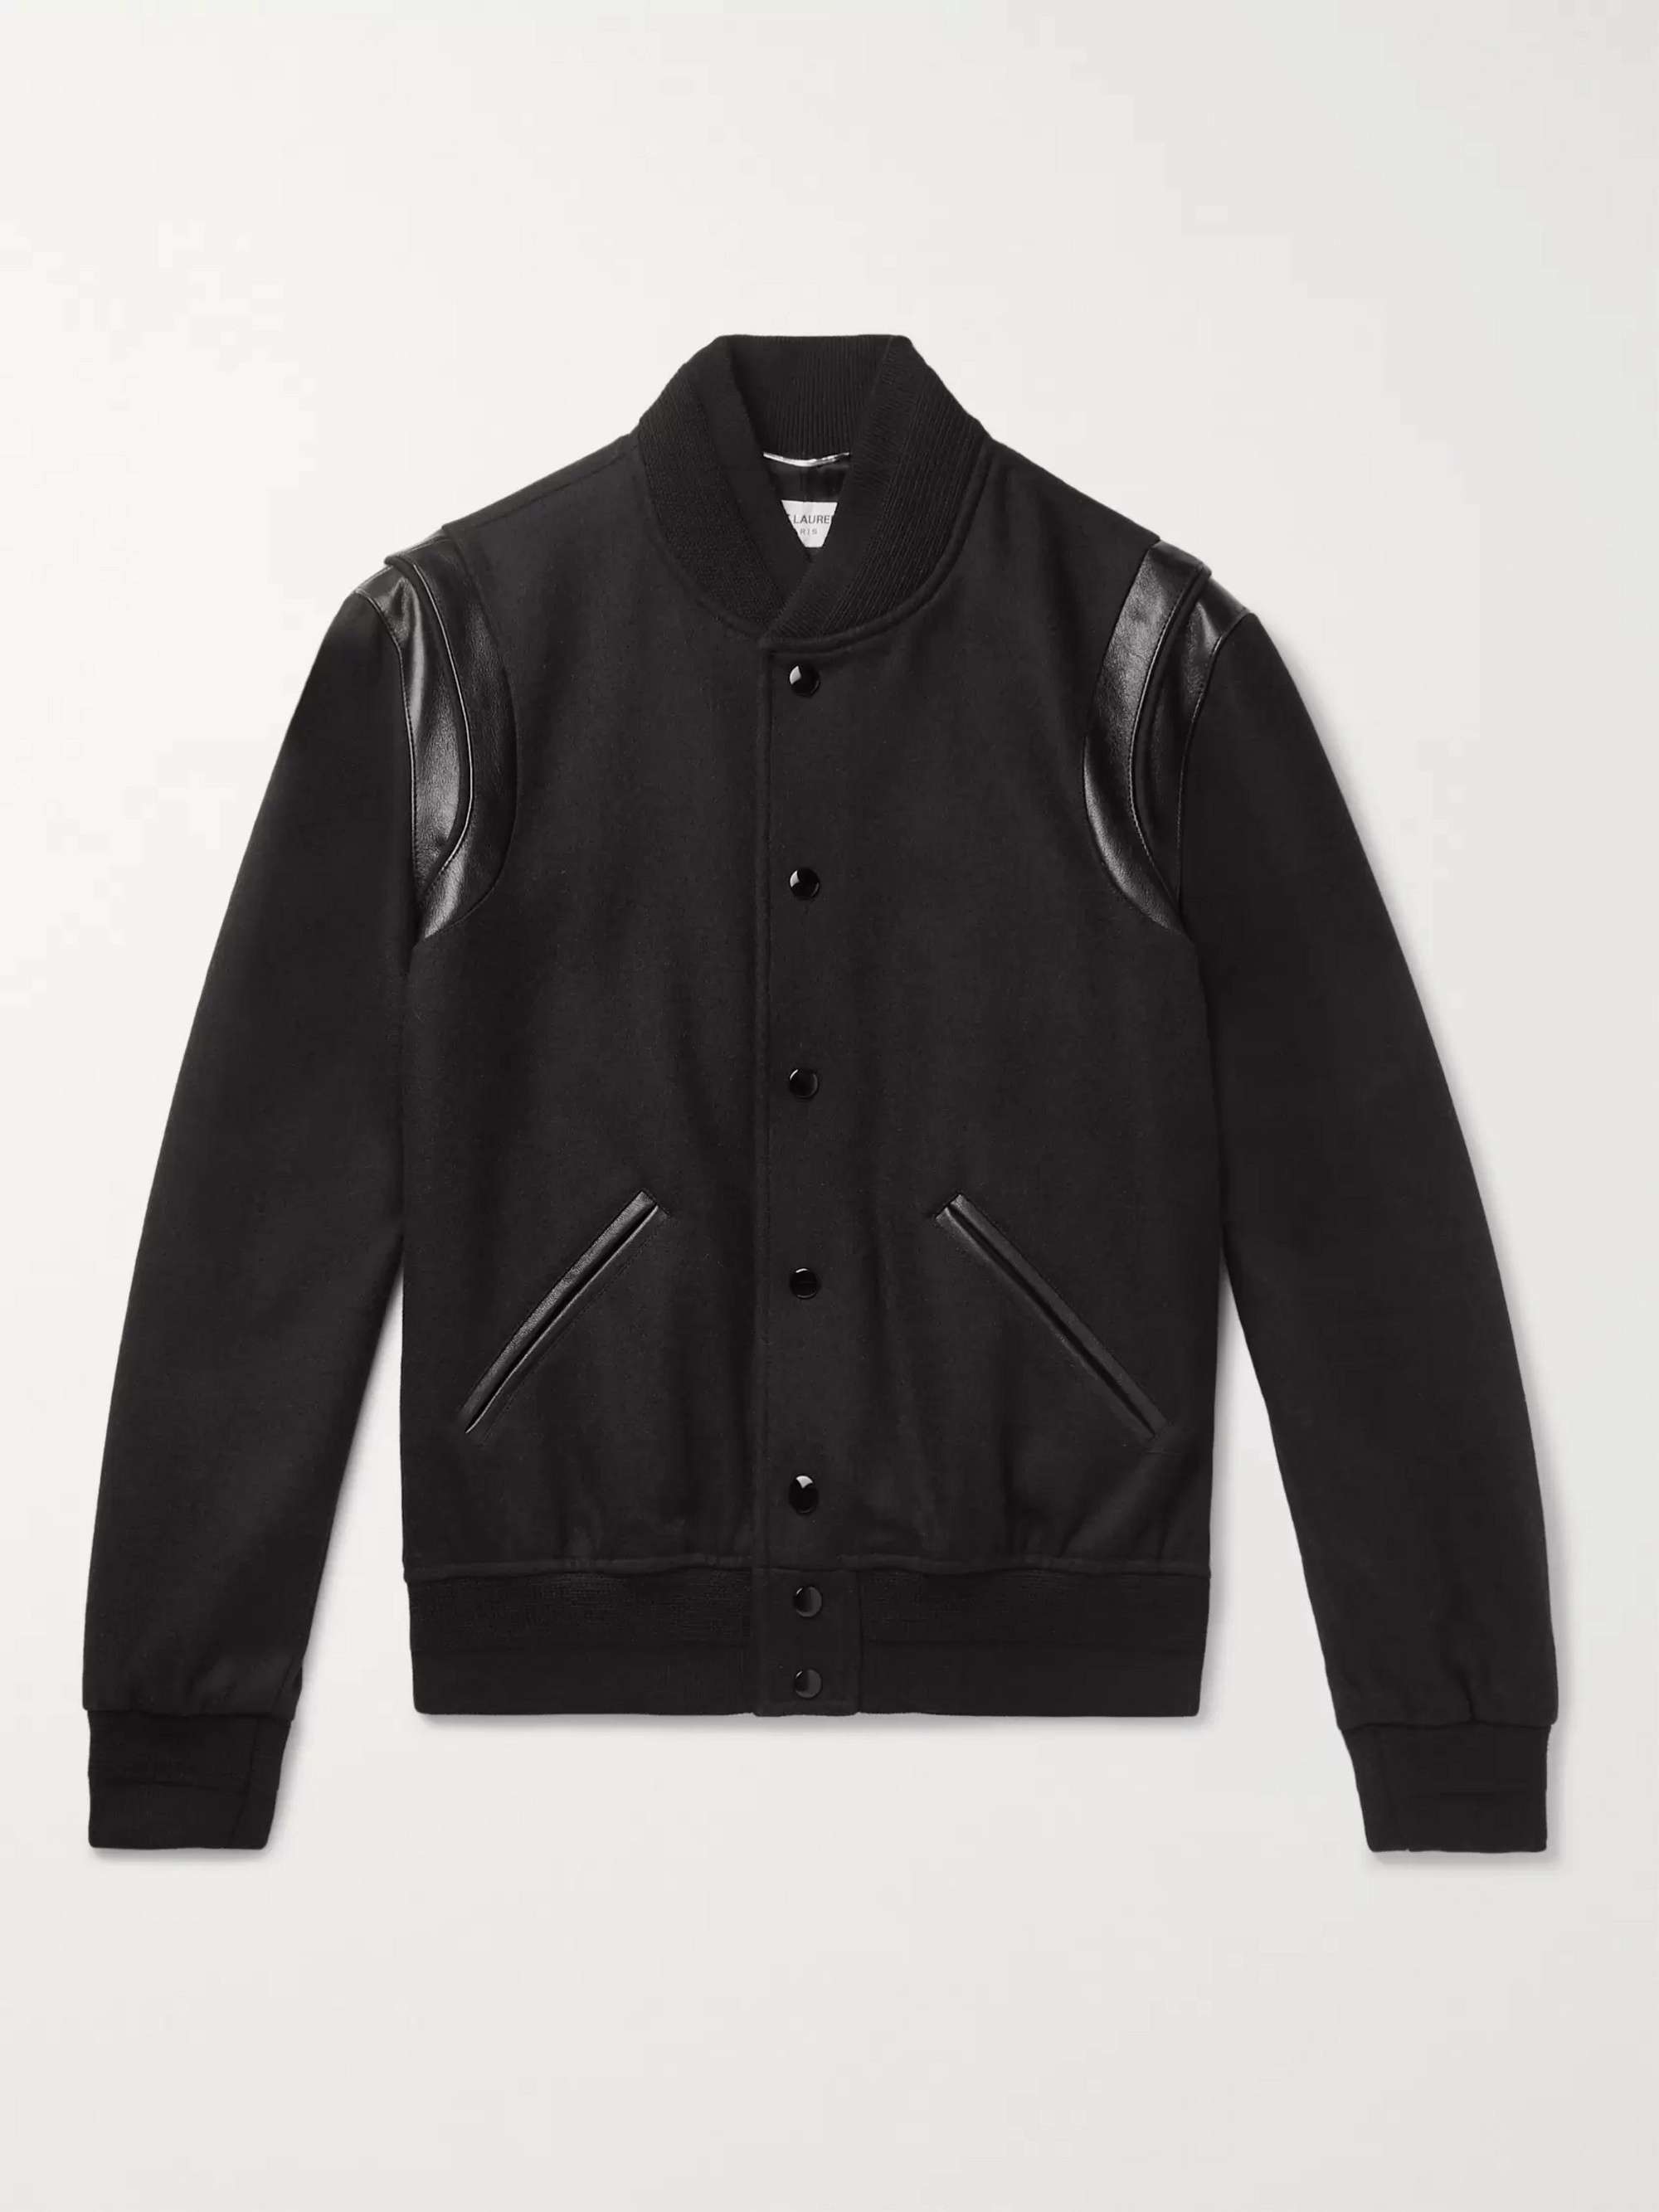 SAINT LAURENT Teddy Leather-Trimmed Wool Bomber Jacket